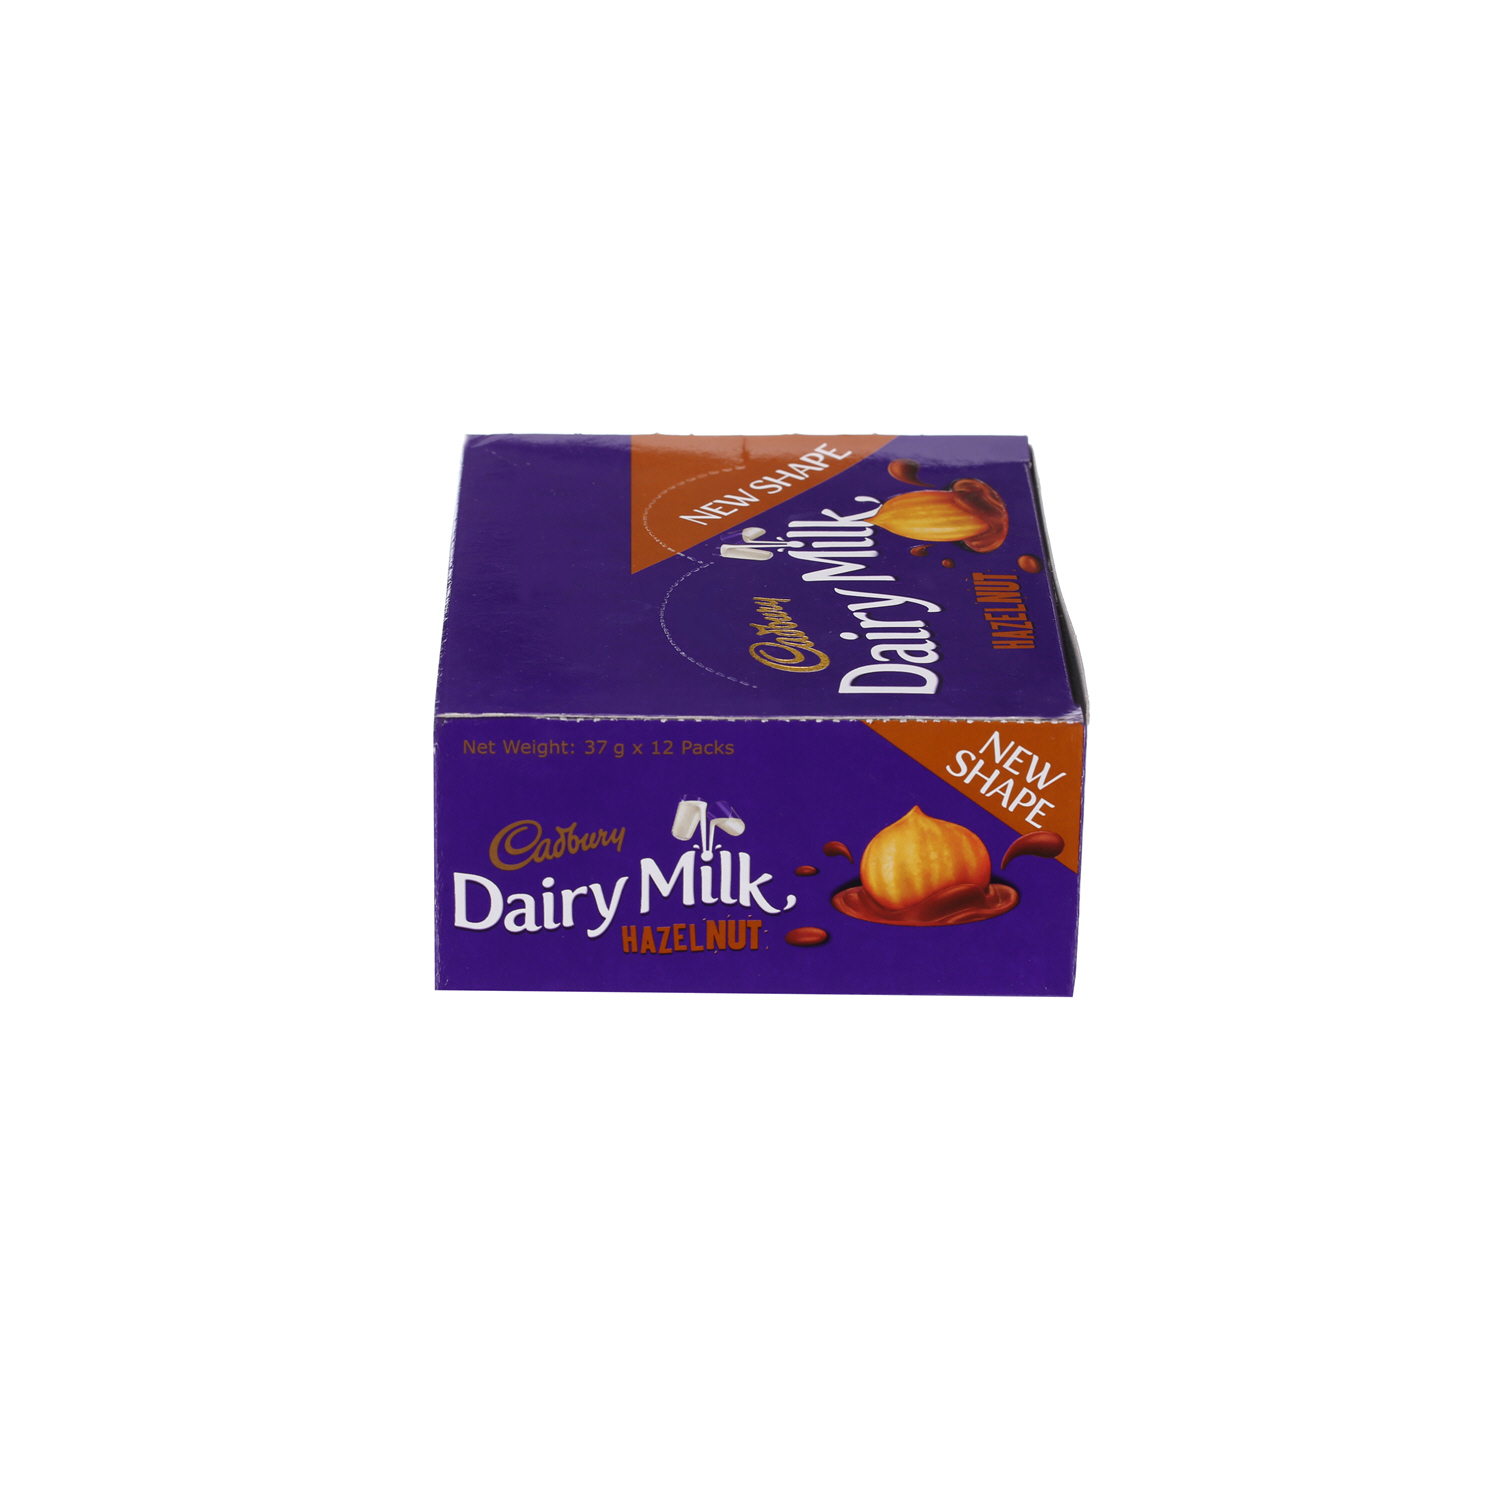 Cadbury Hazelnut Chocolate 37 g × 12 Pieces